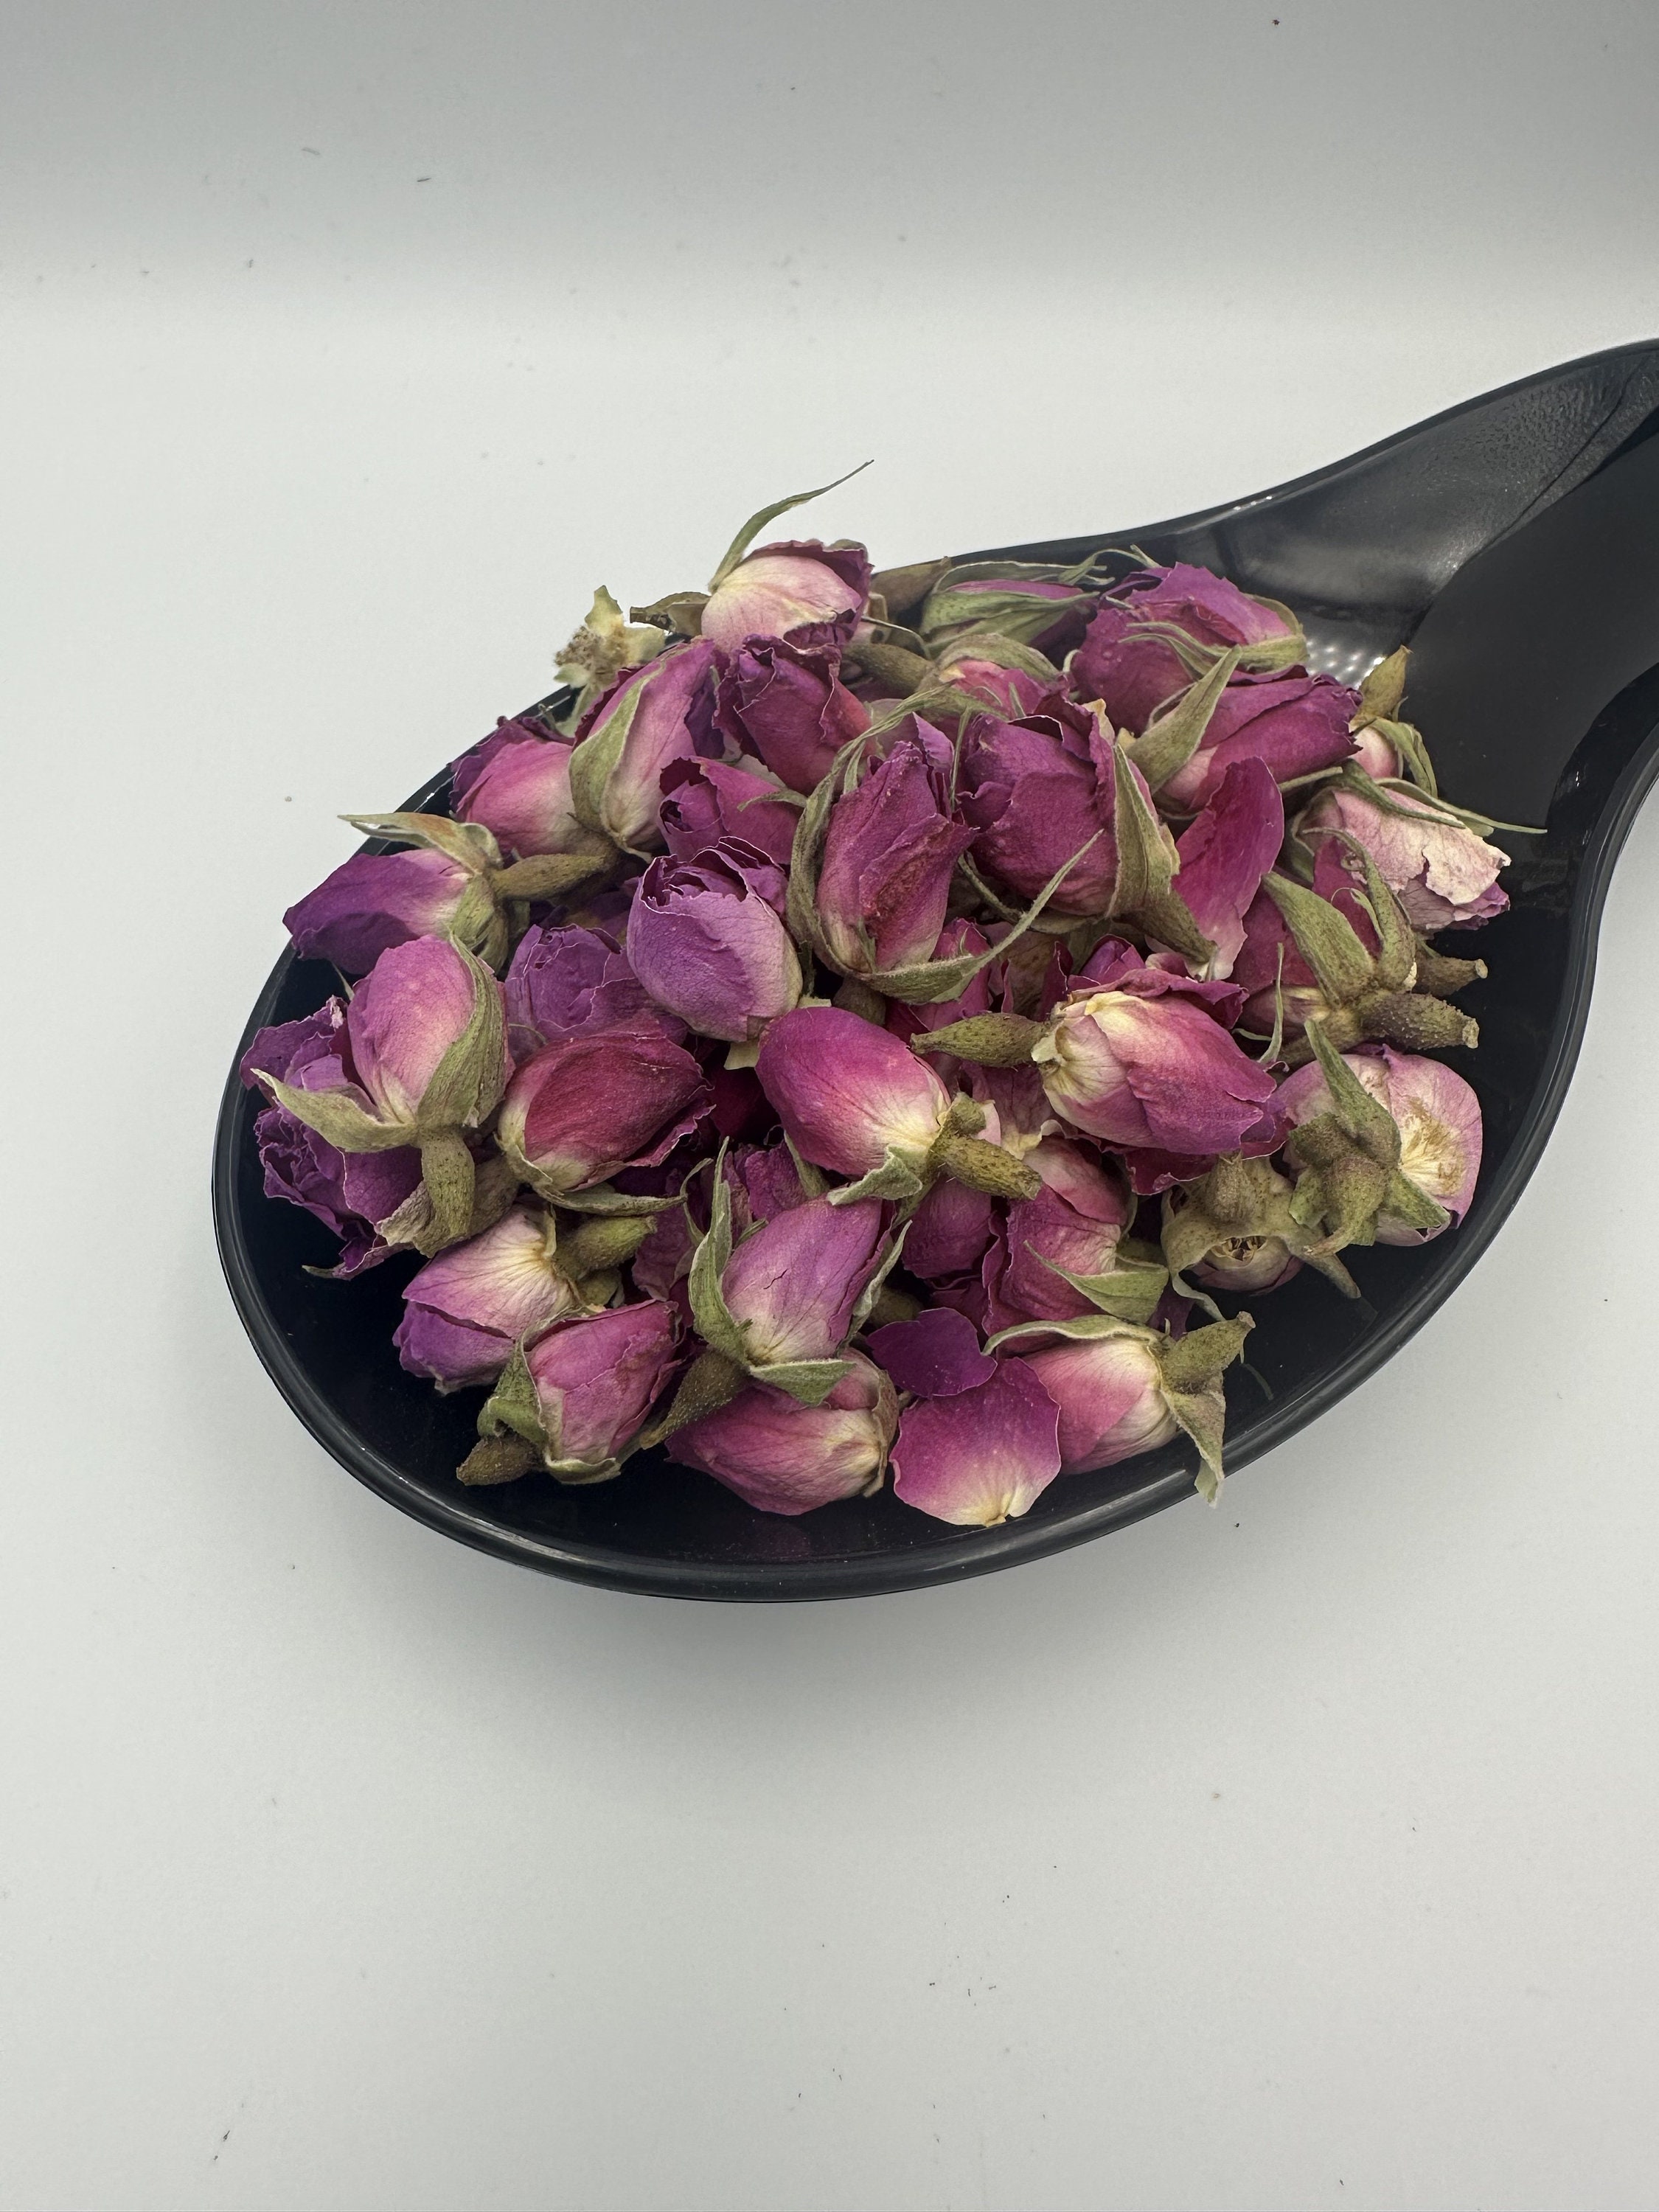 Whole Rose Buds Dried Loose Tea Rosa Damascena Superior Quality Fragrance &  Fresh Flower Buds 